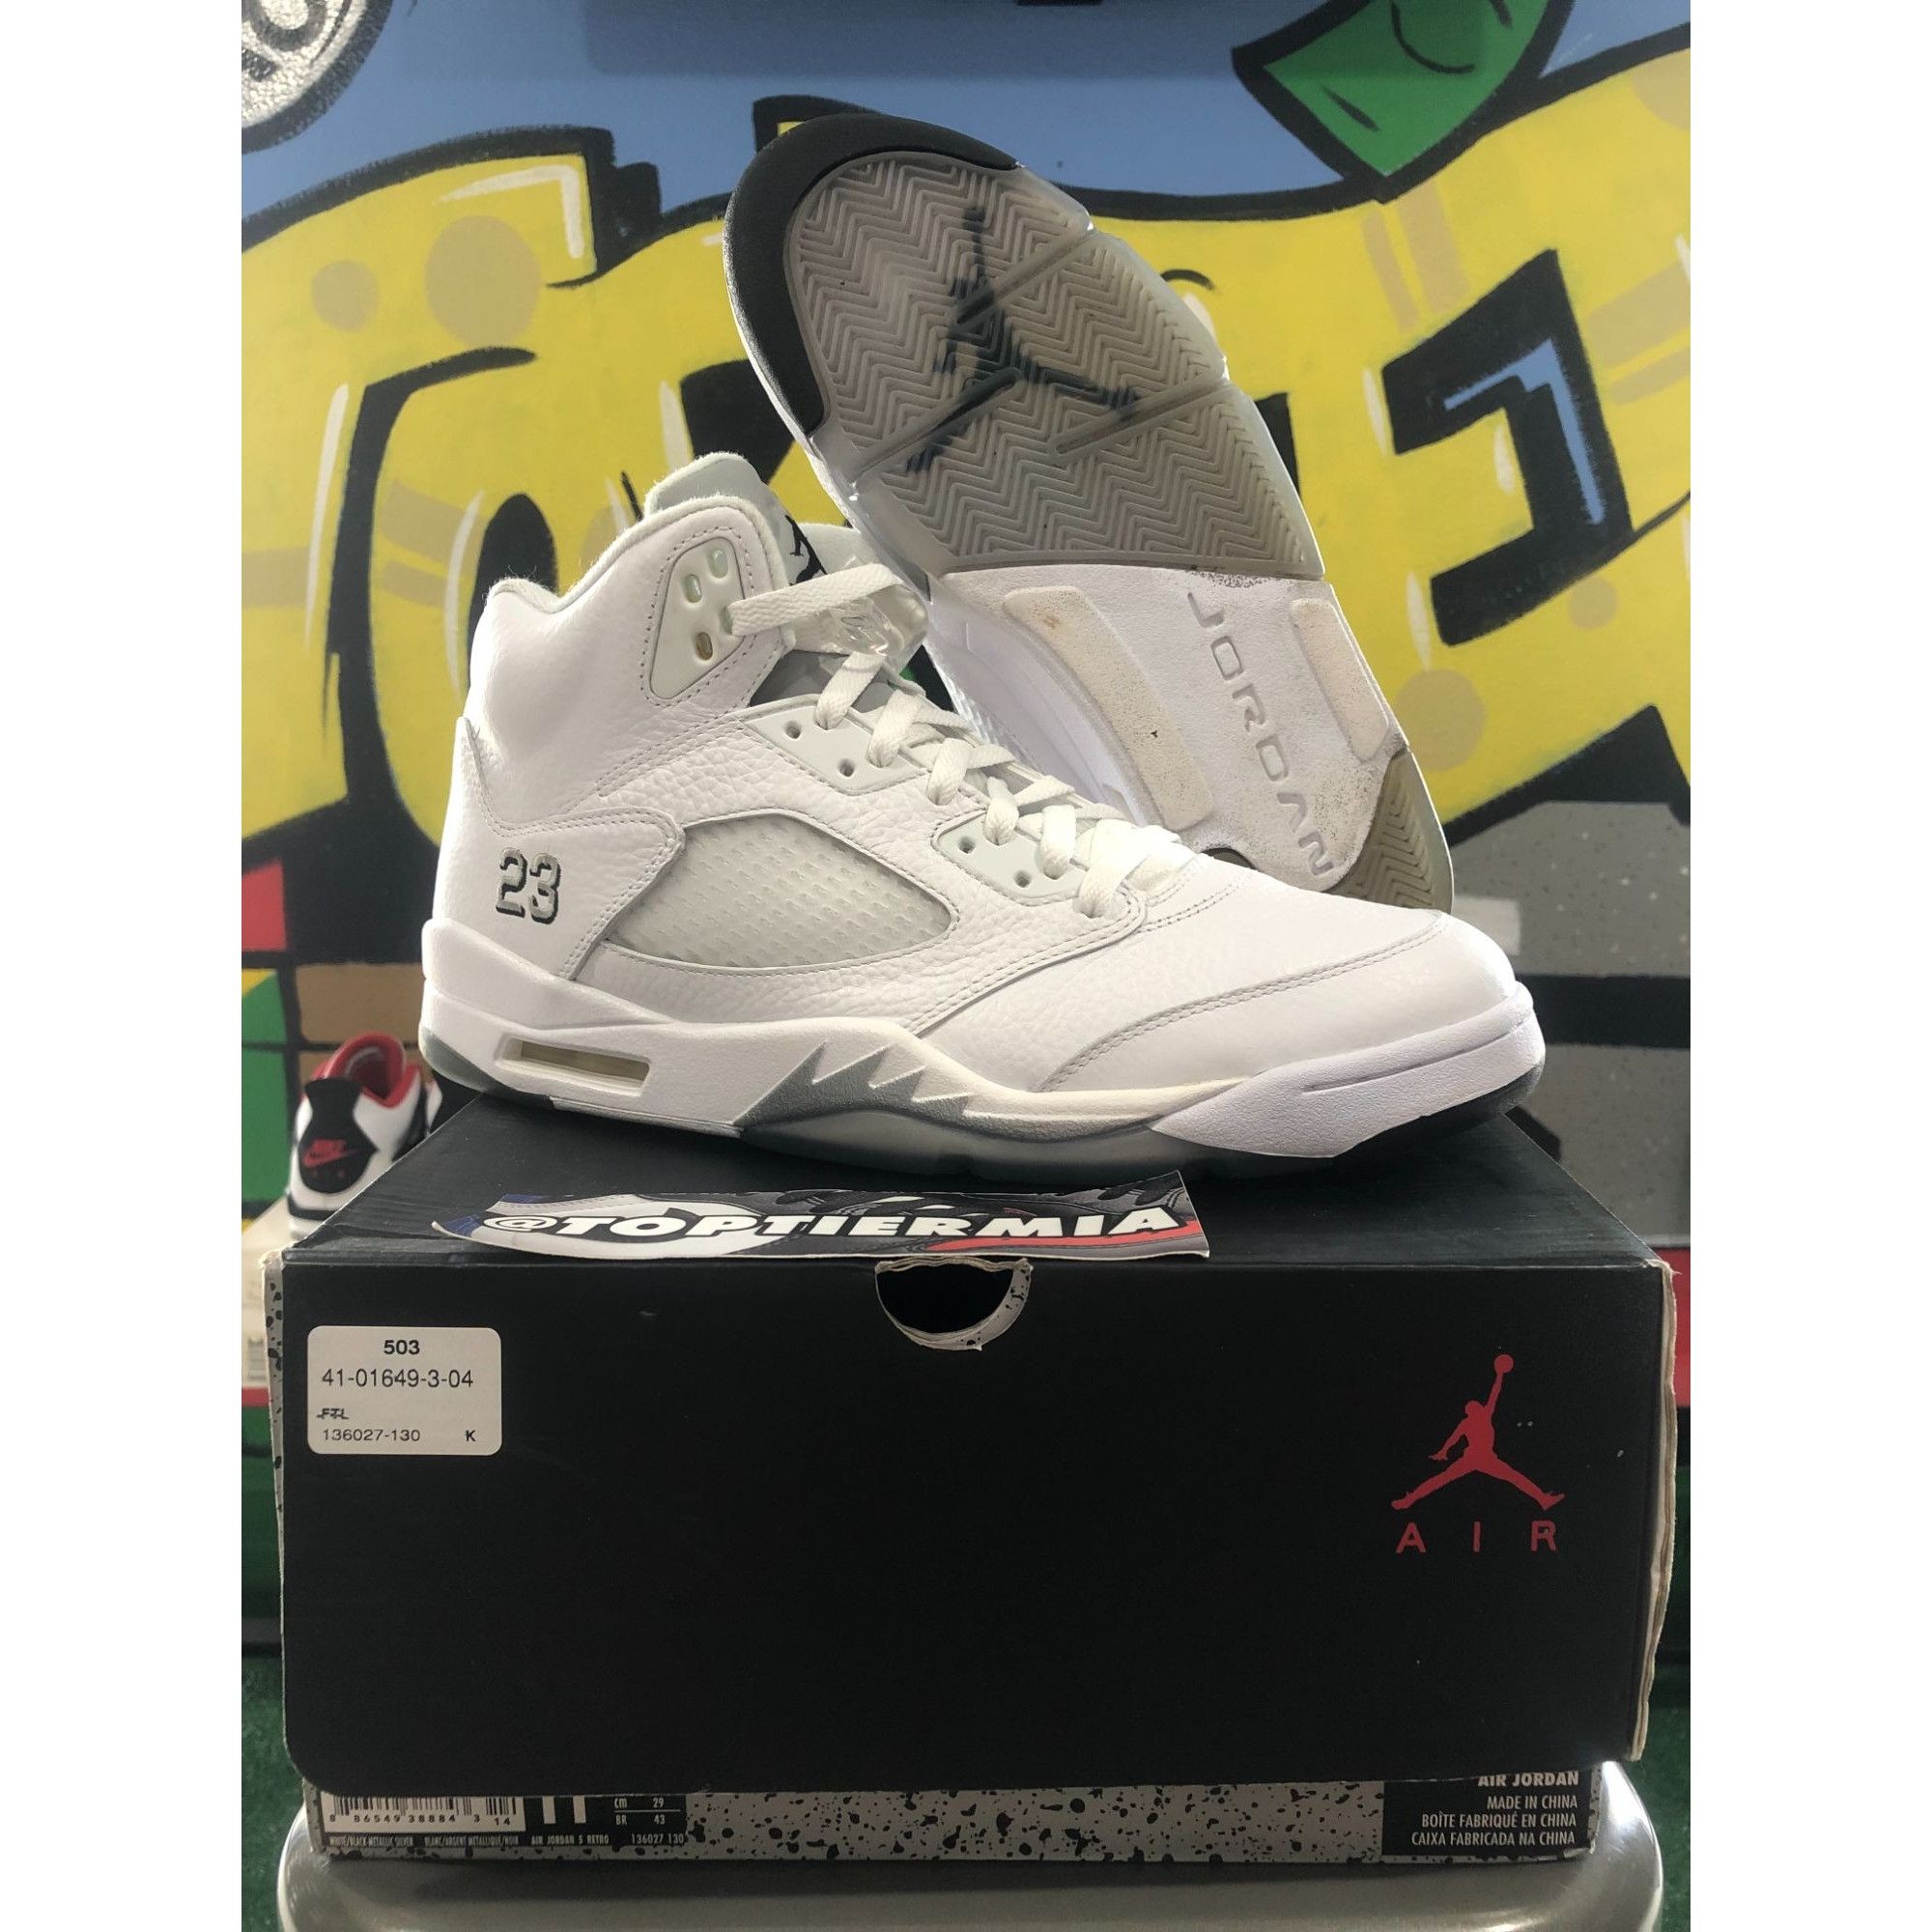 Pre-owned Jordan Brand Air Jordan 5 White Metallic 2015 Size 11 Shoes